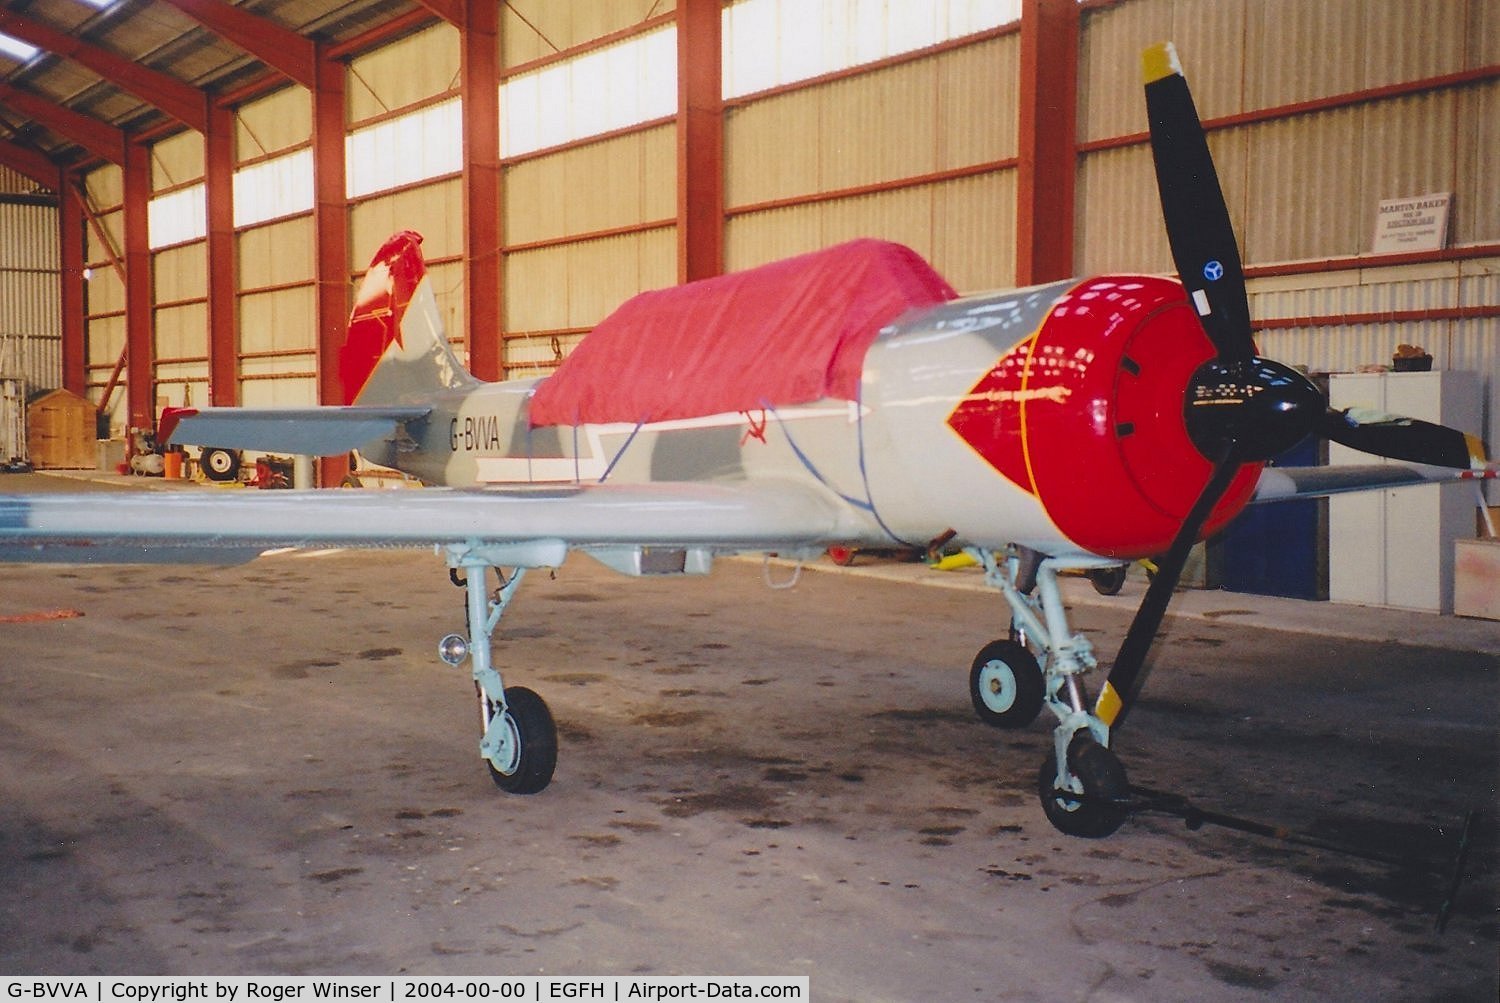 G-BVVA, 1987 Bacau Yak-52 C/N 877610, Based at Swansea Airport. Photo taken circa August 2004 soon after receiving a new camouflage scheme.